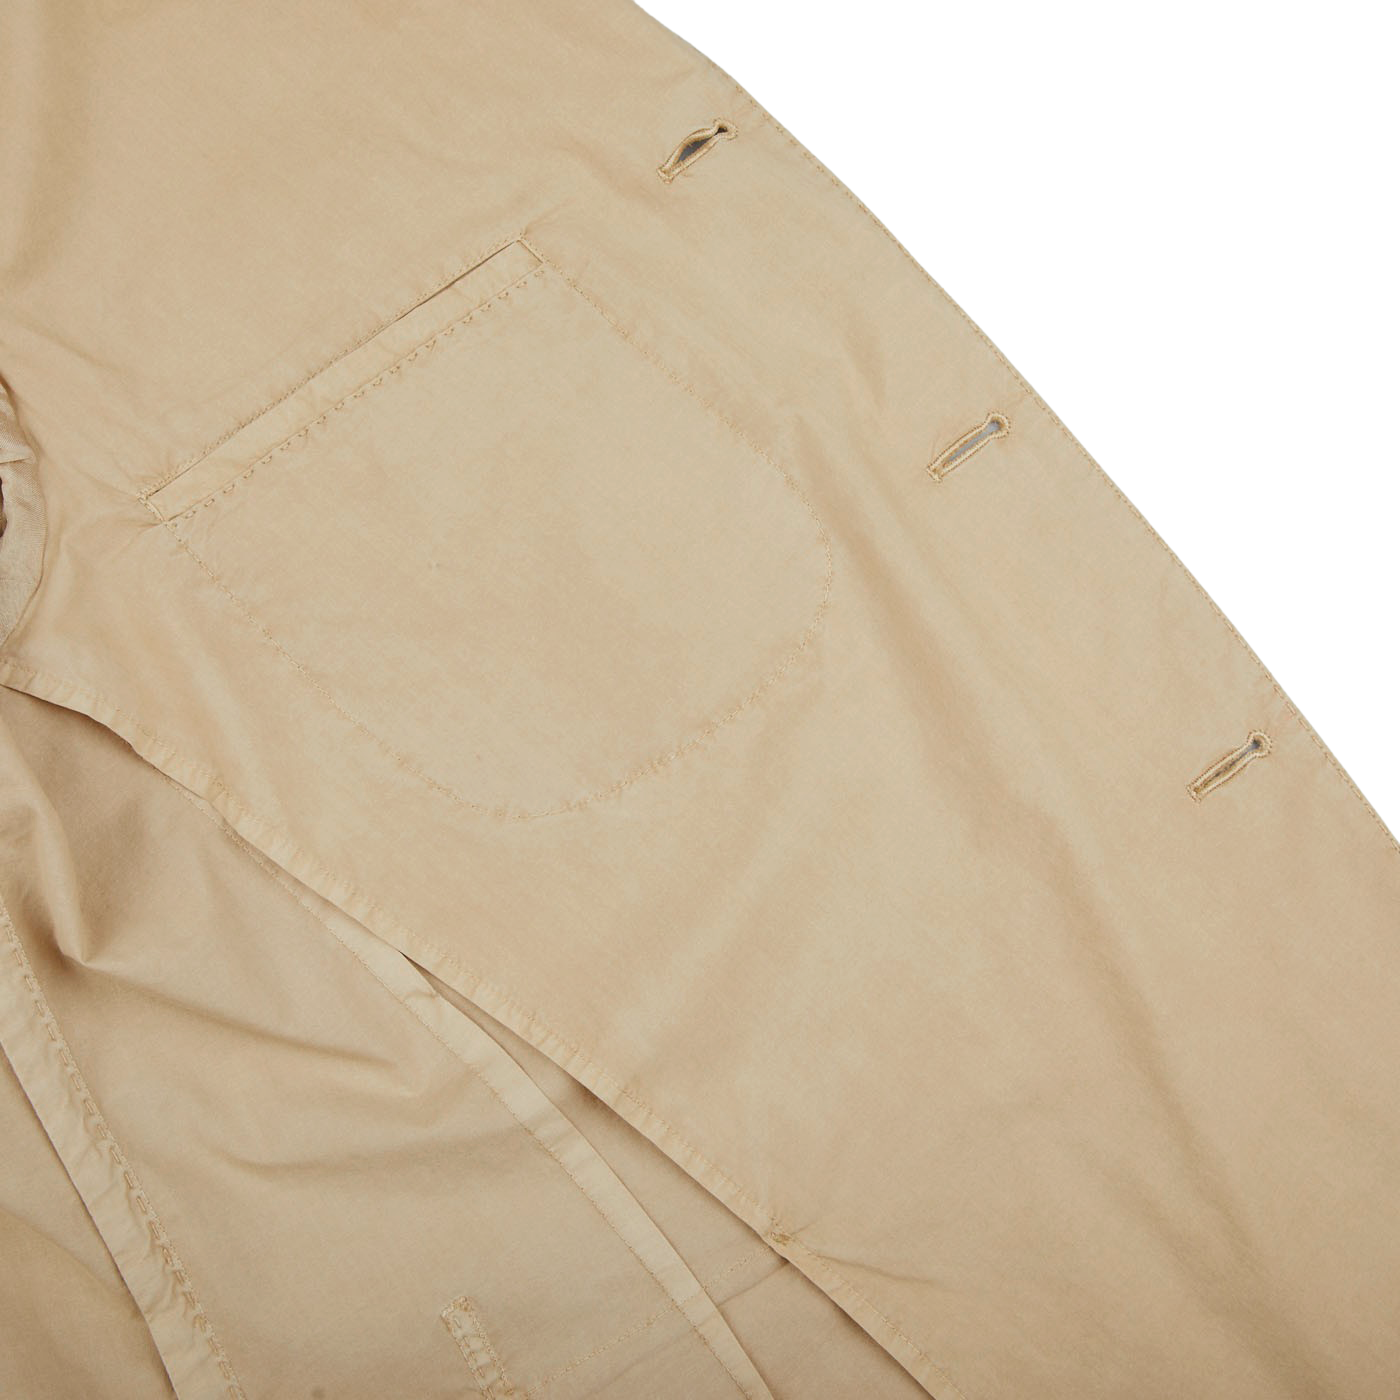 A close up of a Boglioli Khaki Beige Washed Cotton K Jacket with pockets, showcasing its impeccable craftsmanship.